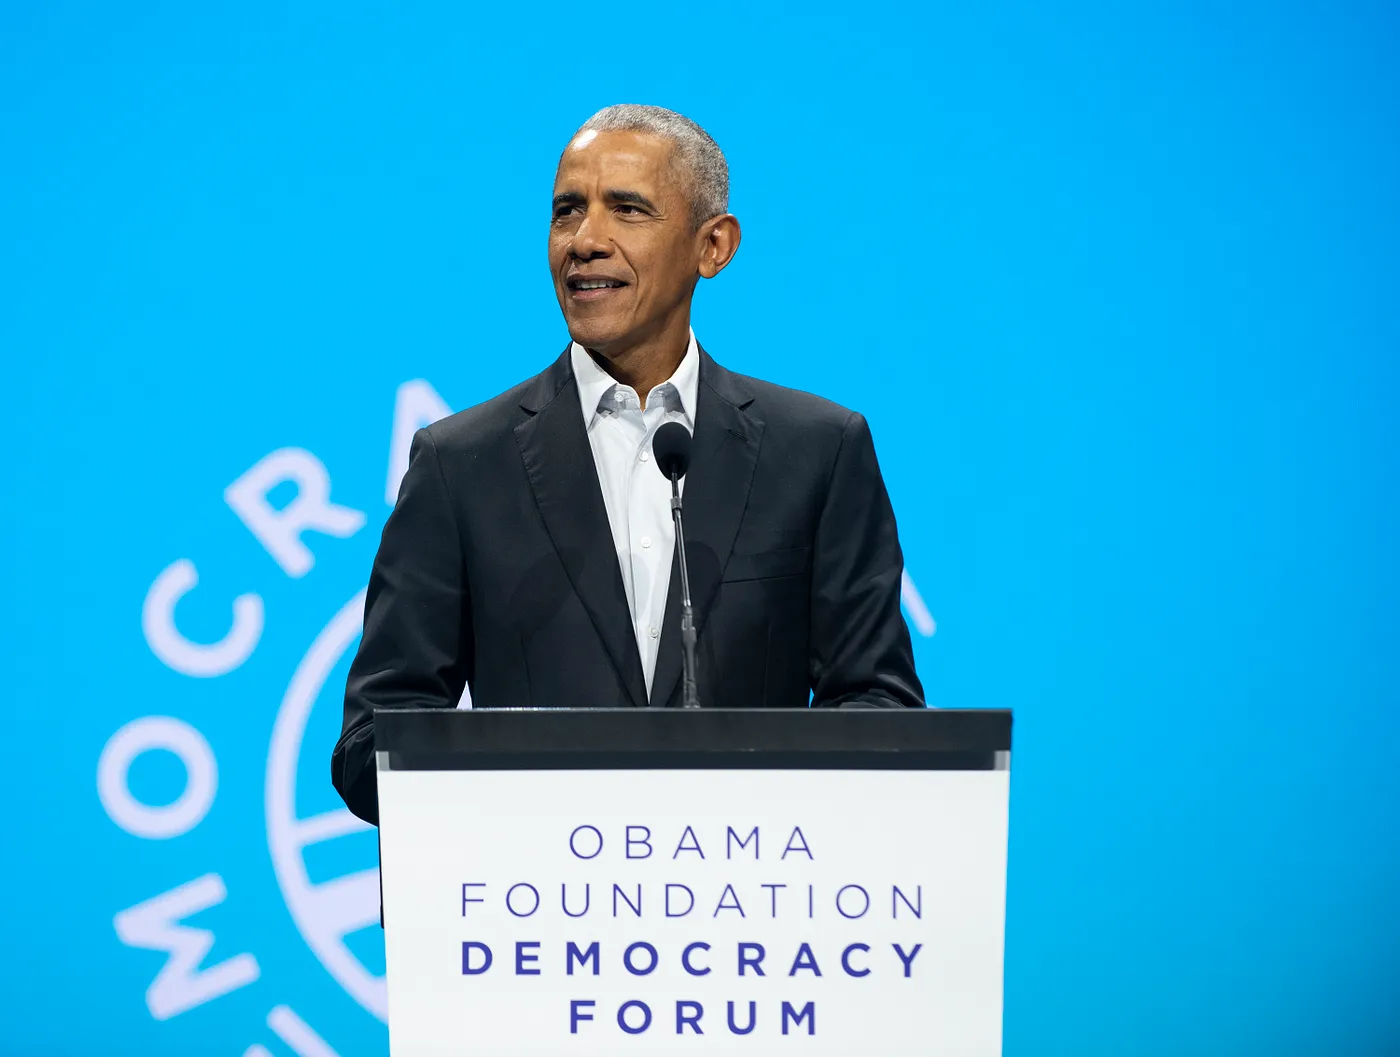 Obama's Speech at Obama Foundation 2022 Democracy Forum